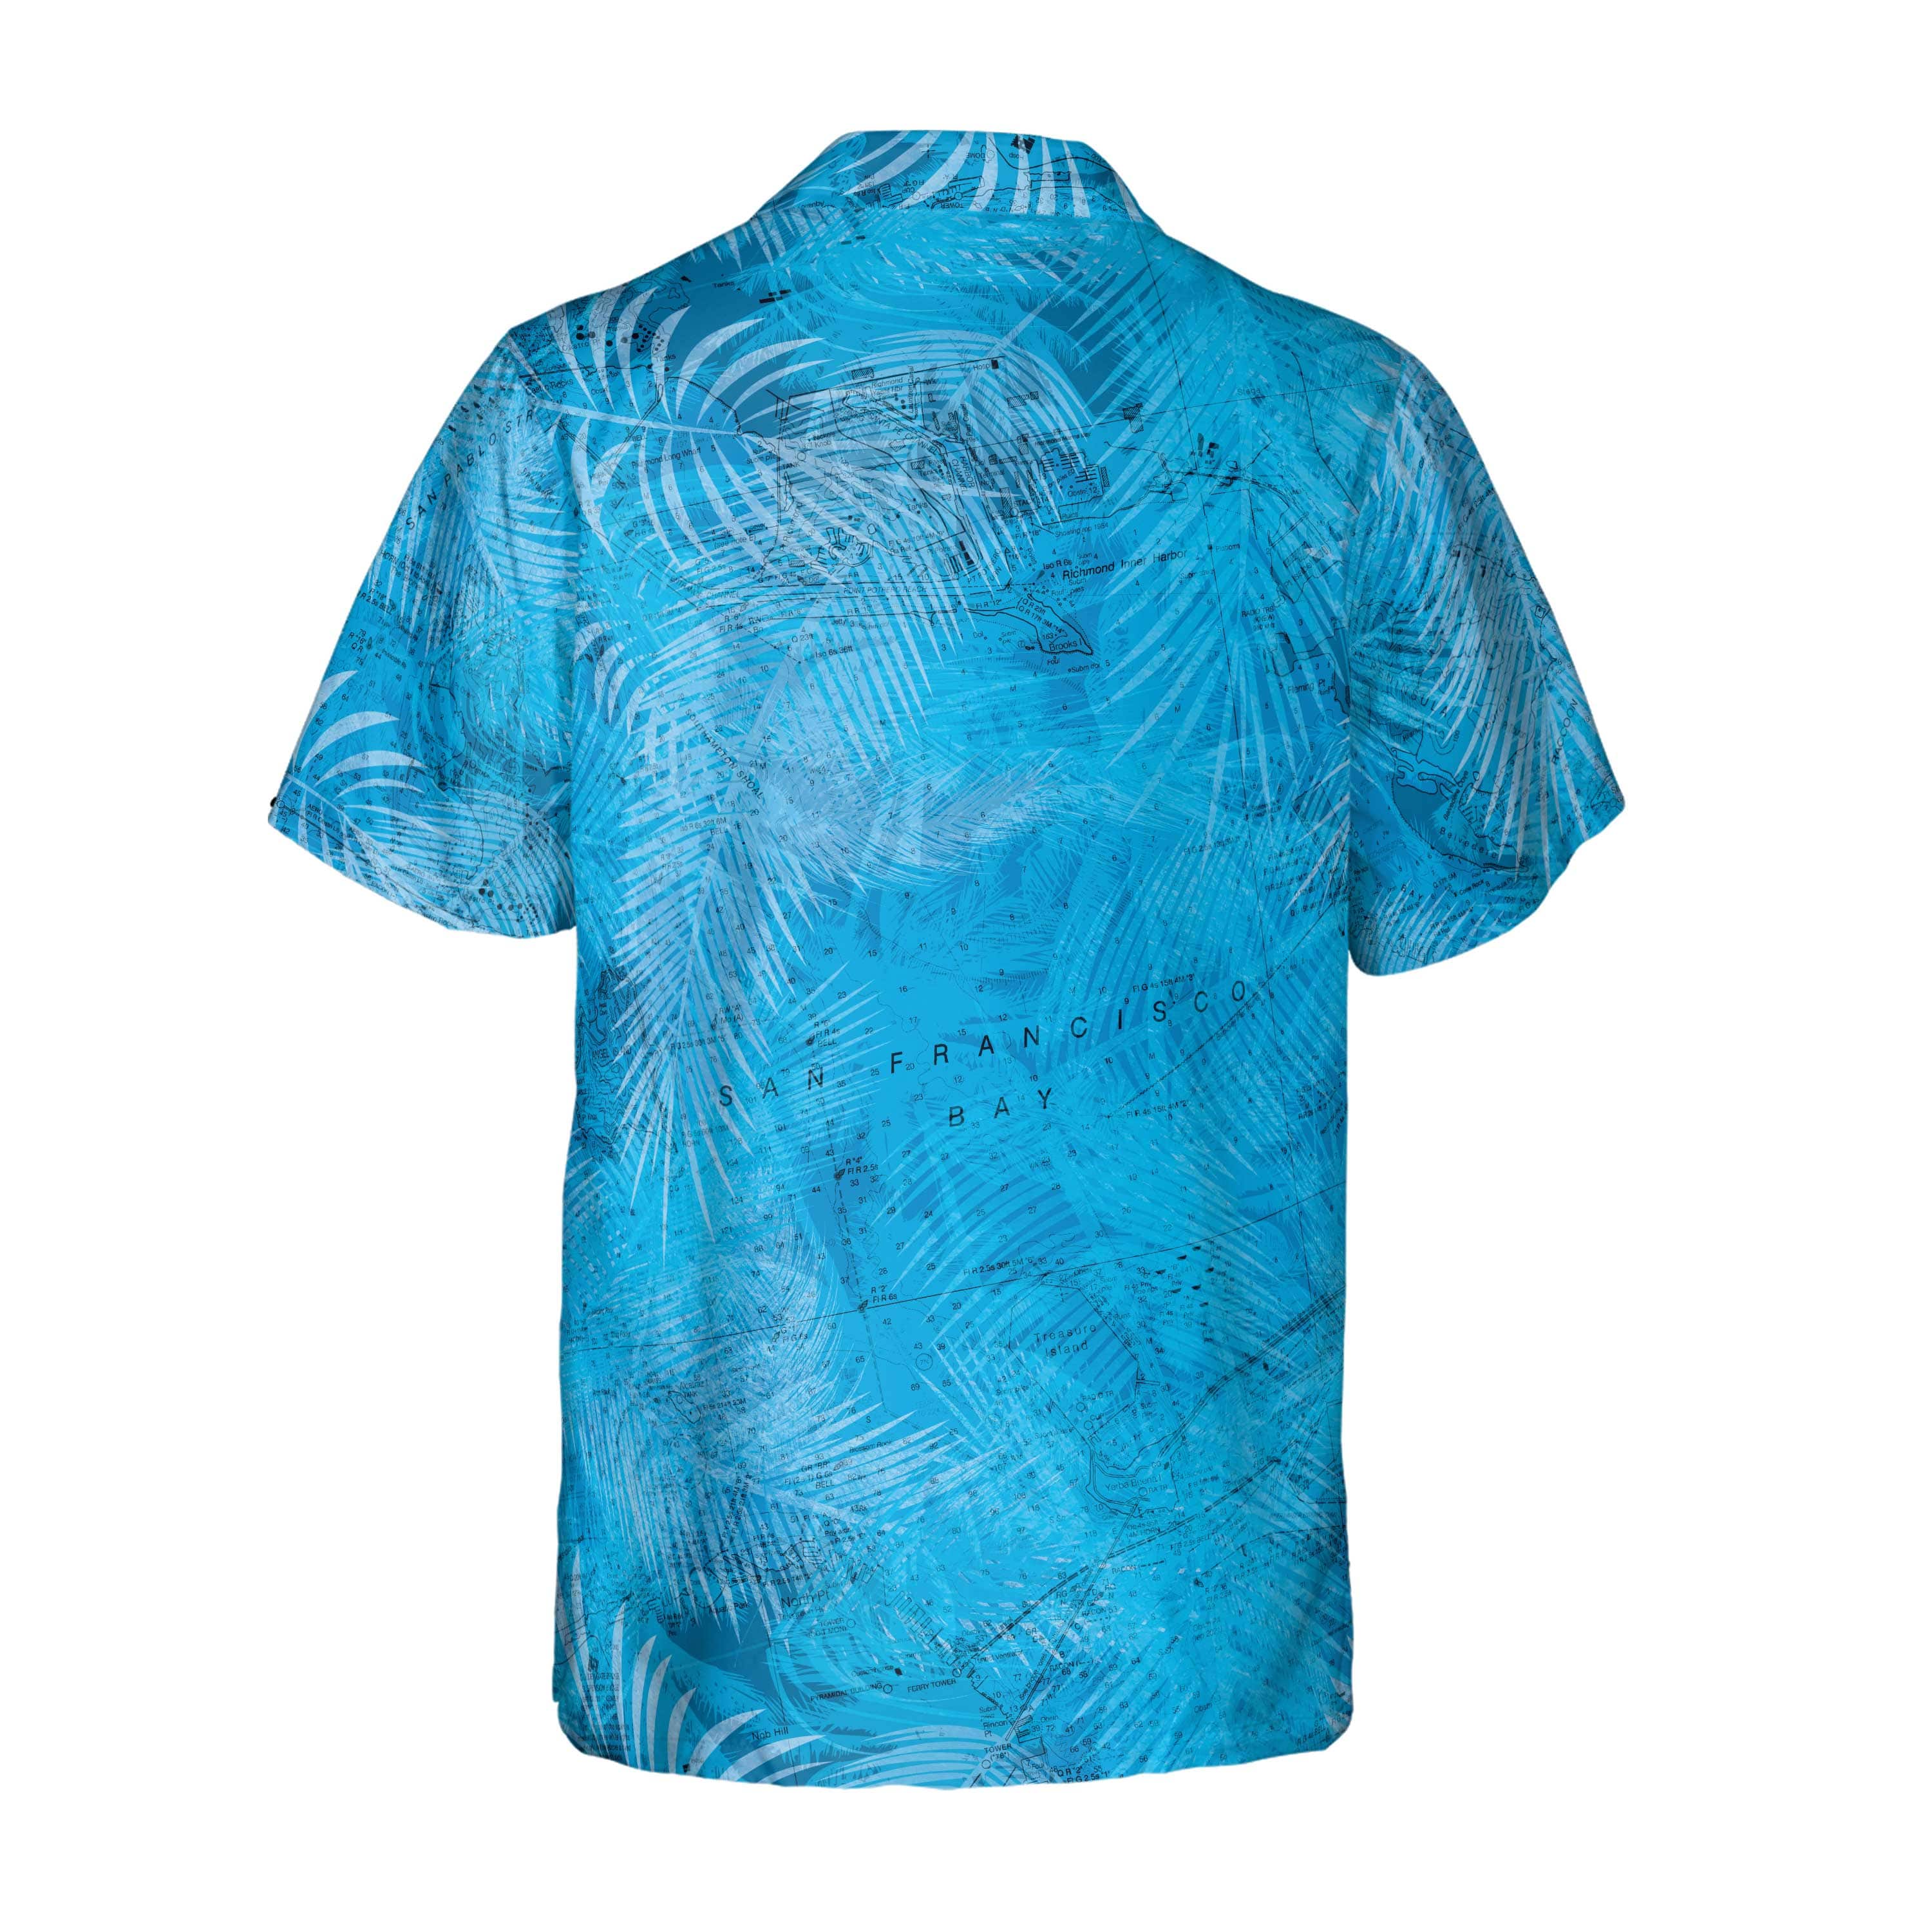 The San Francisco Bay Tropical Blue Shirt